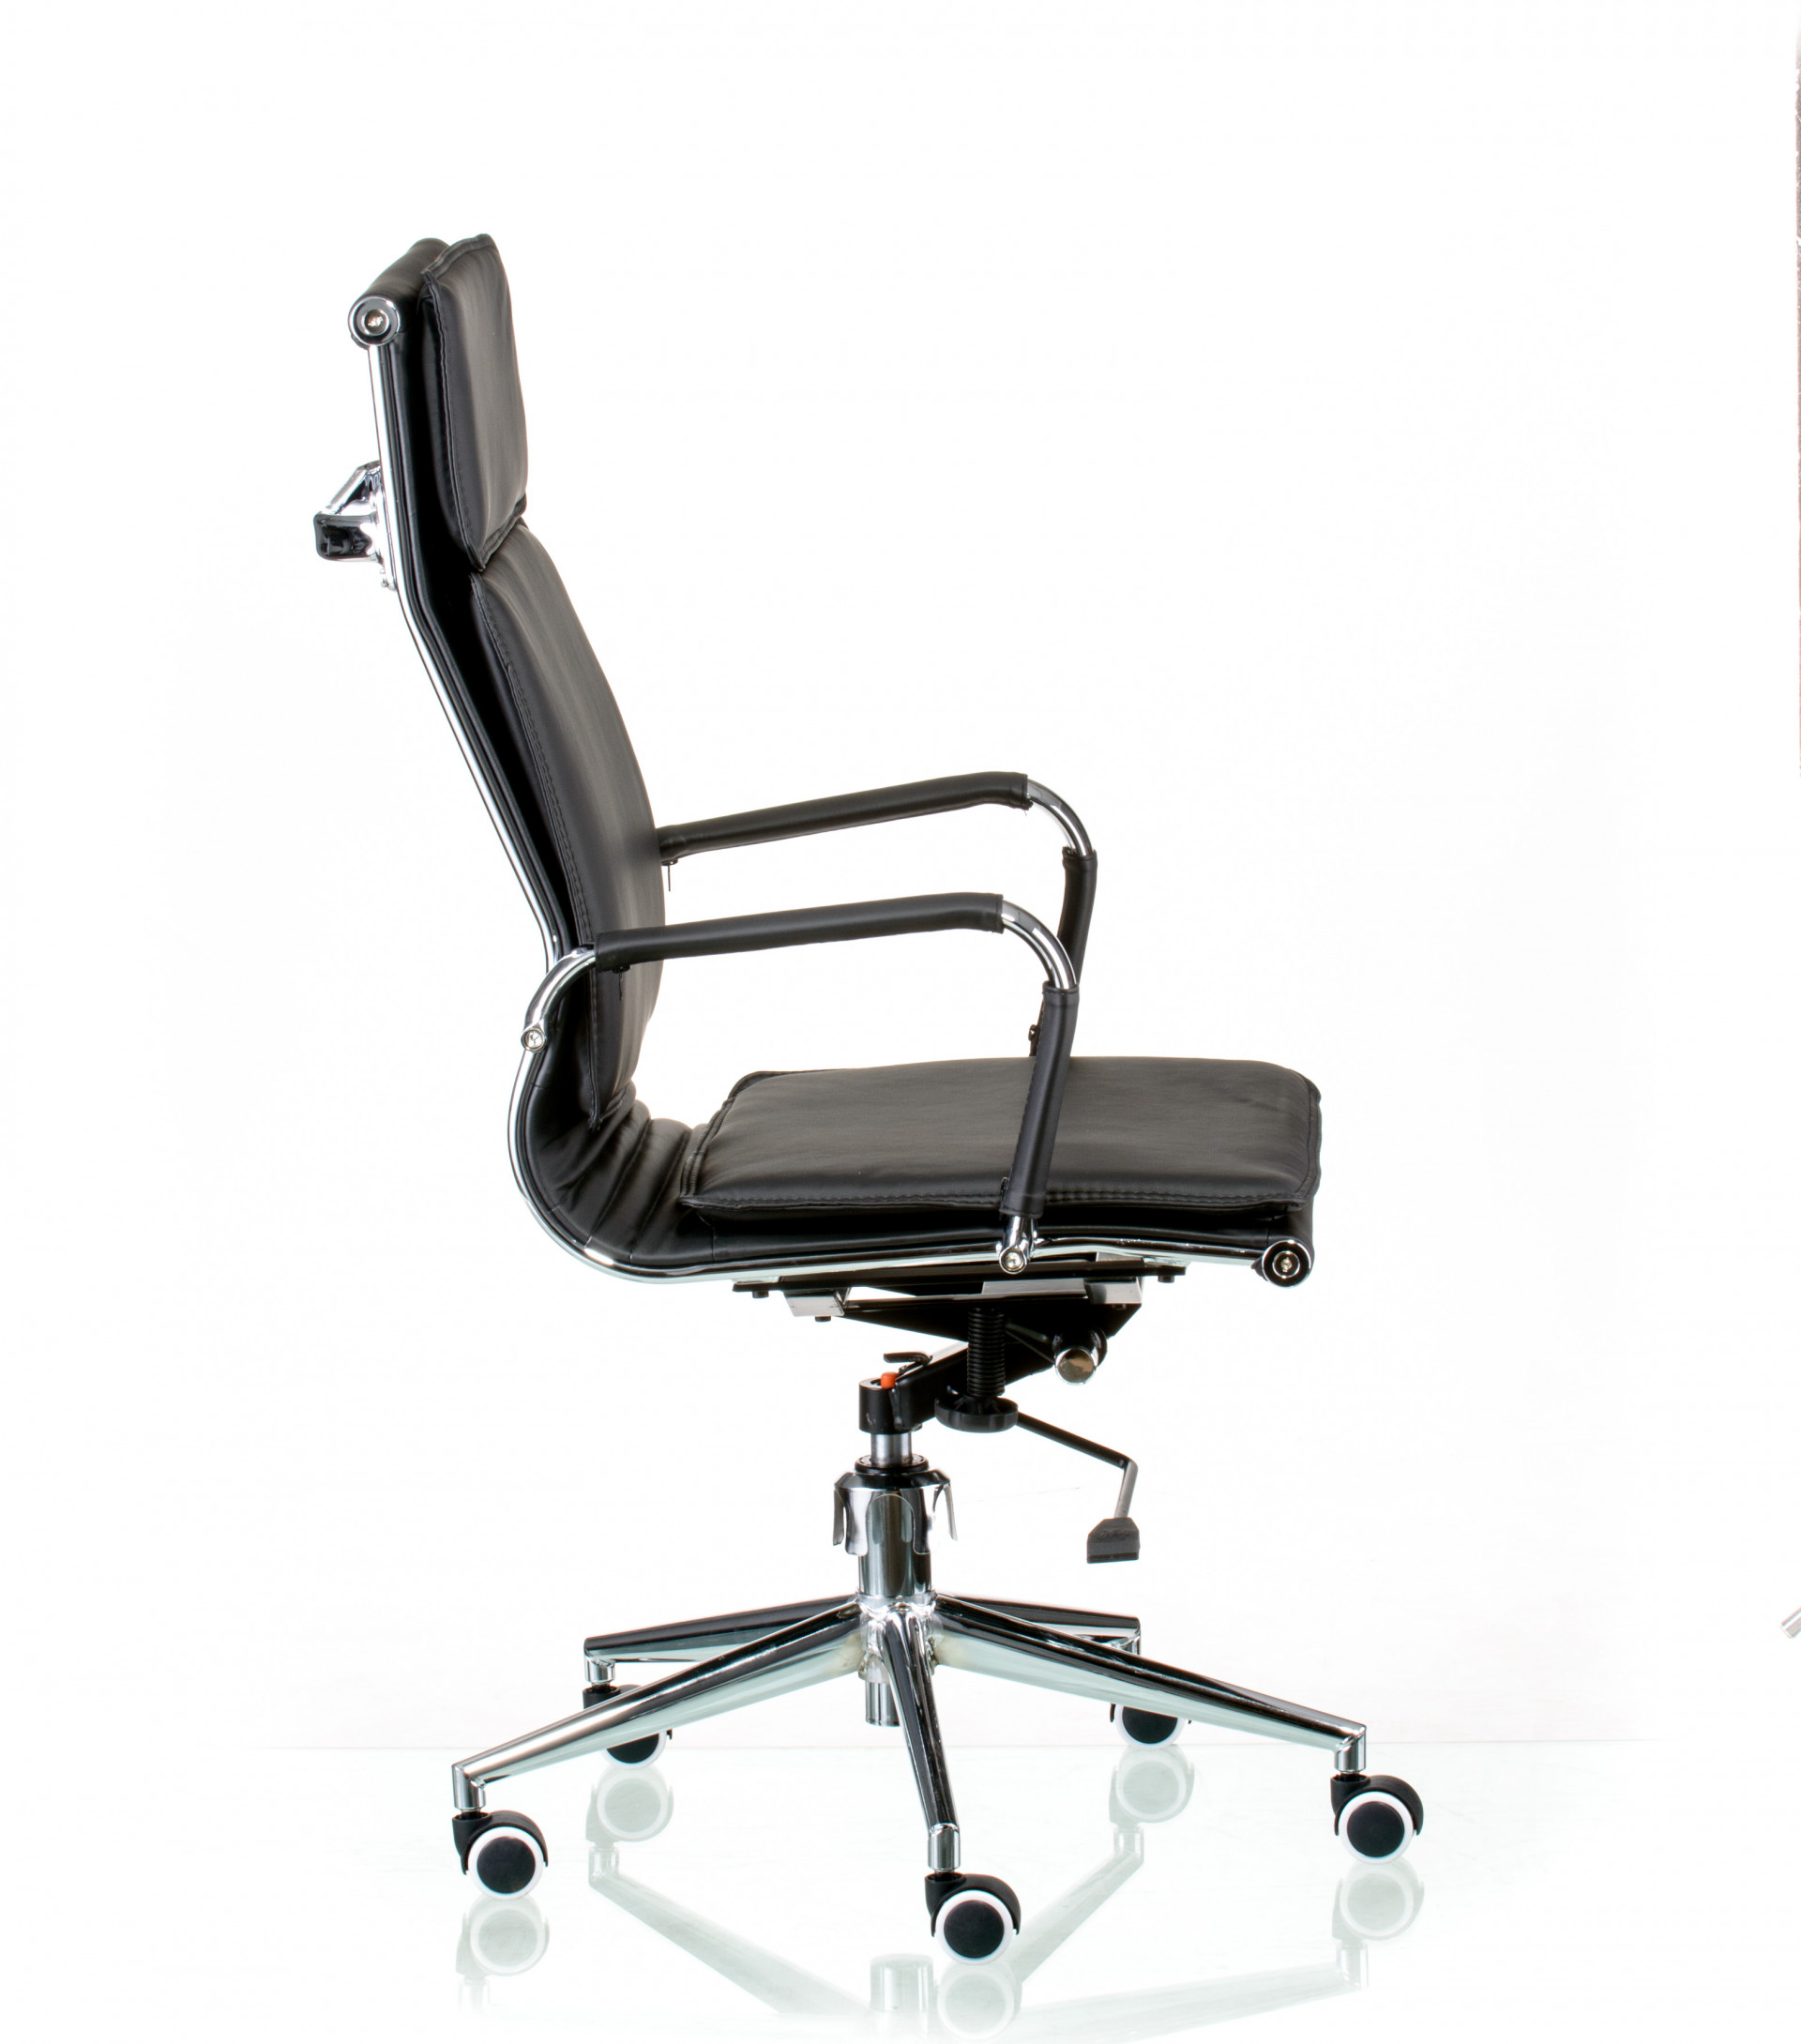 Кресло офисное TPRO- Solano 4 artleather black E5210